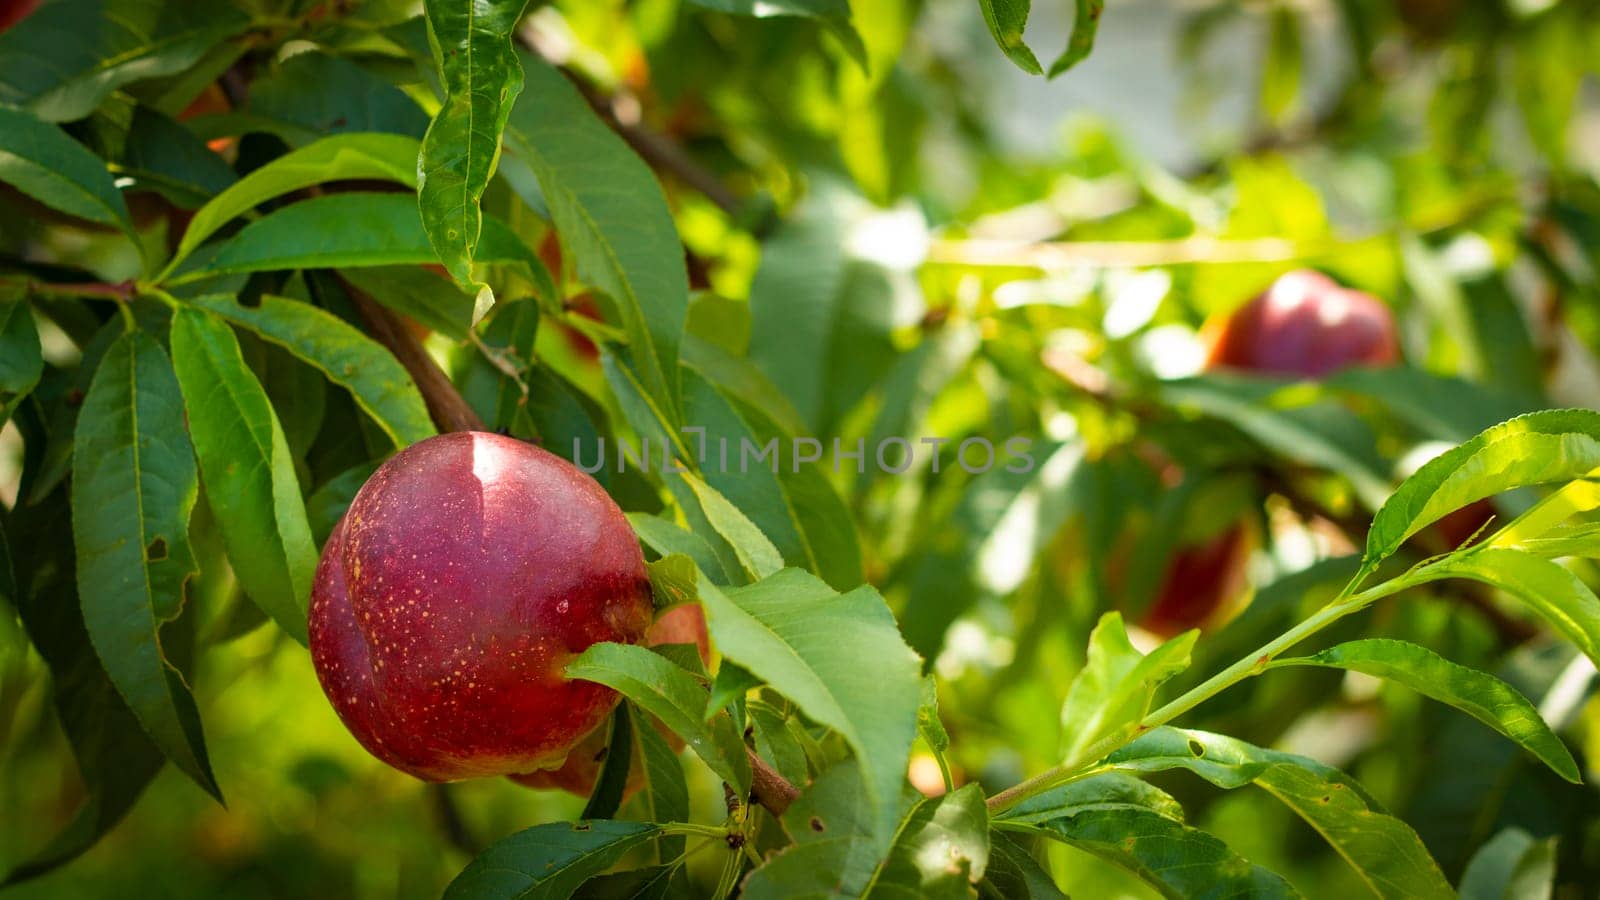 Nectarine peaches grows on tree in sunlight. Fresh organic natural fruit in sun light blur green background